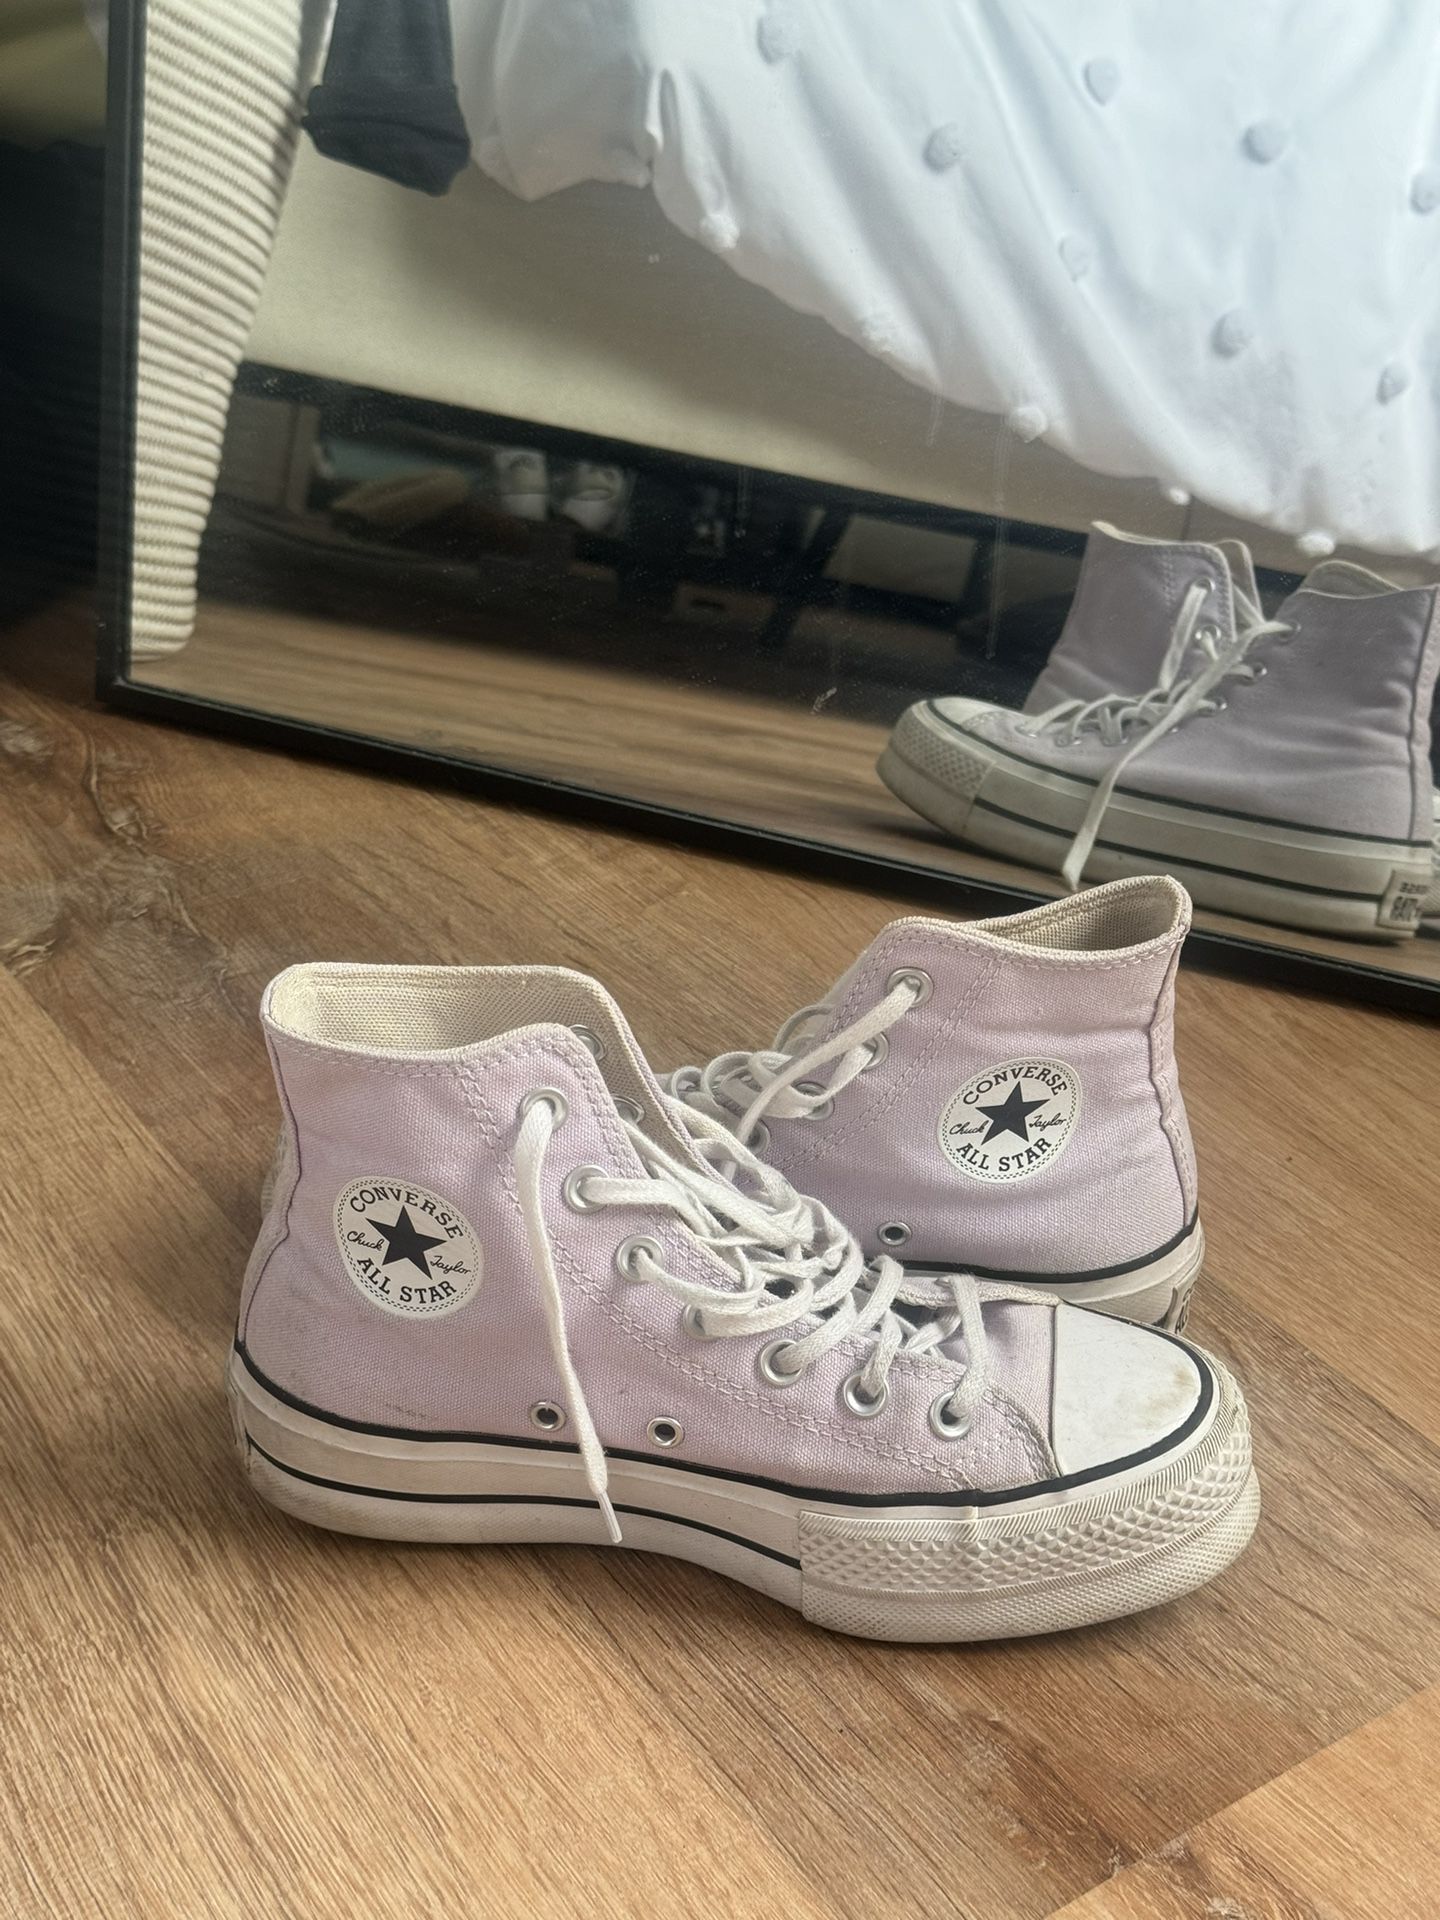 Converse Hightop Size 6. Pastel Purple